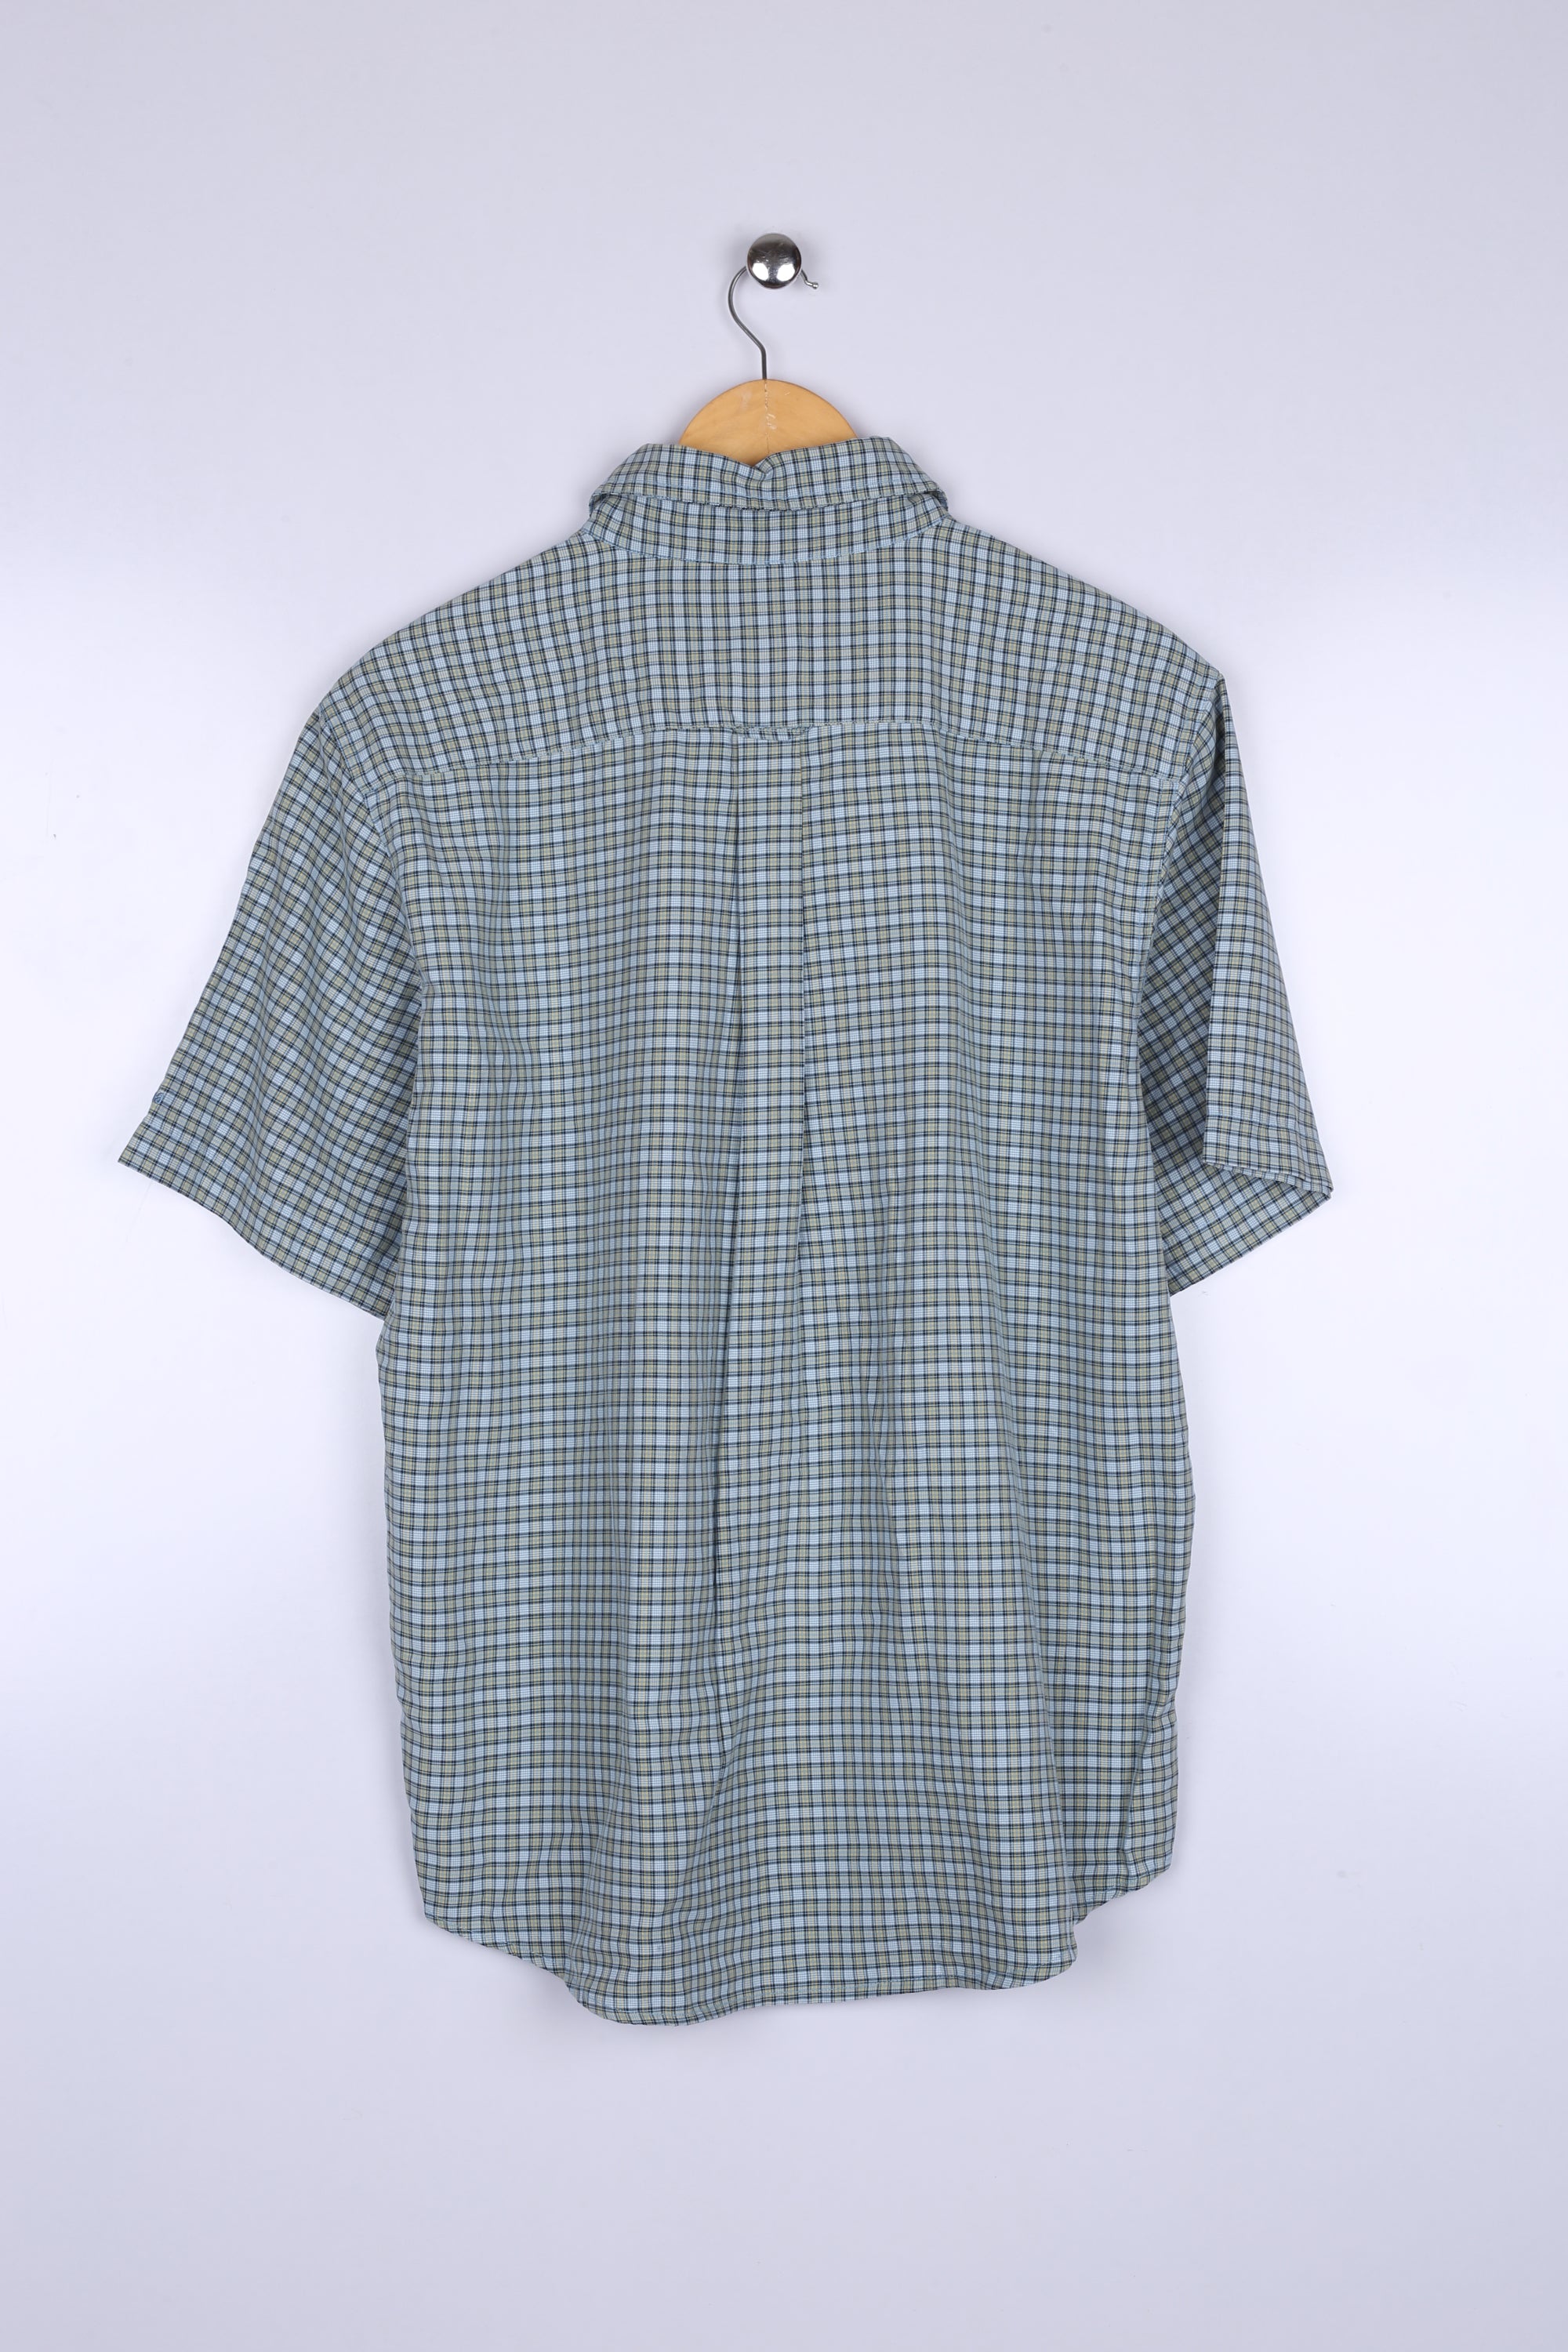 Vintage 90's Columbia Half Sleeve Shirt Checkered